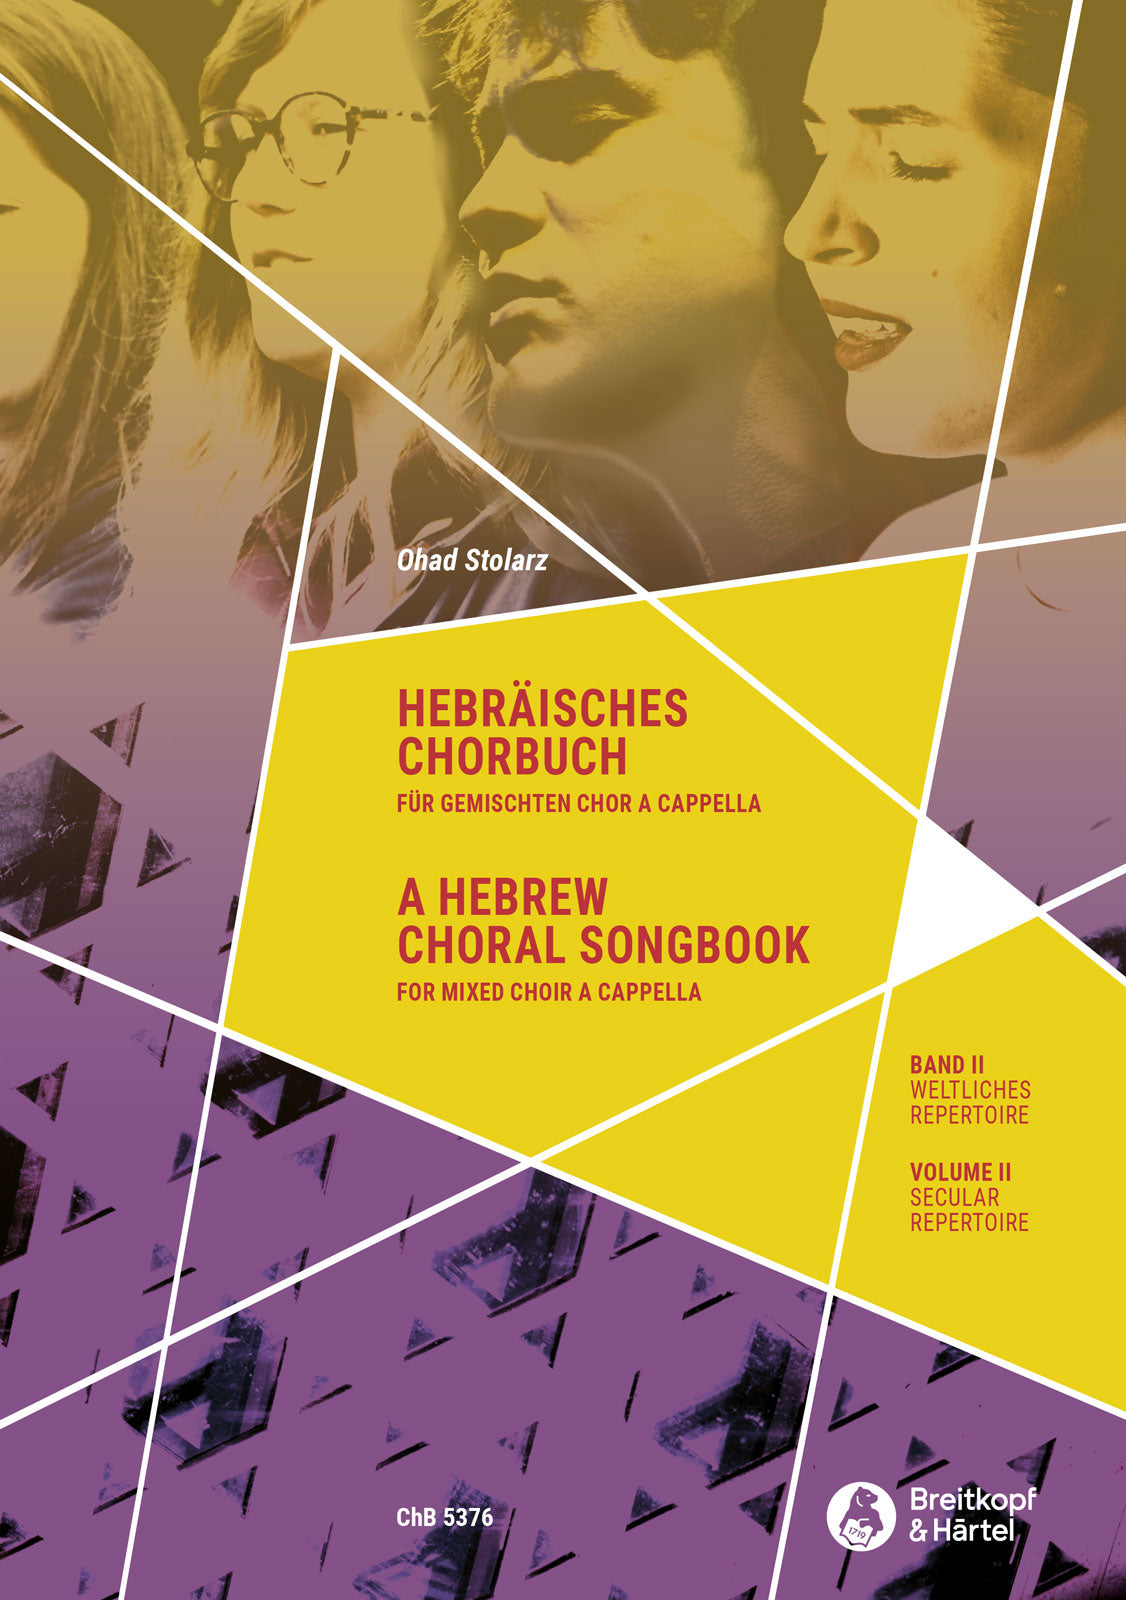 A Hebrew Choral Songbook - Volume 2 (Secular Repertoire)